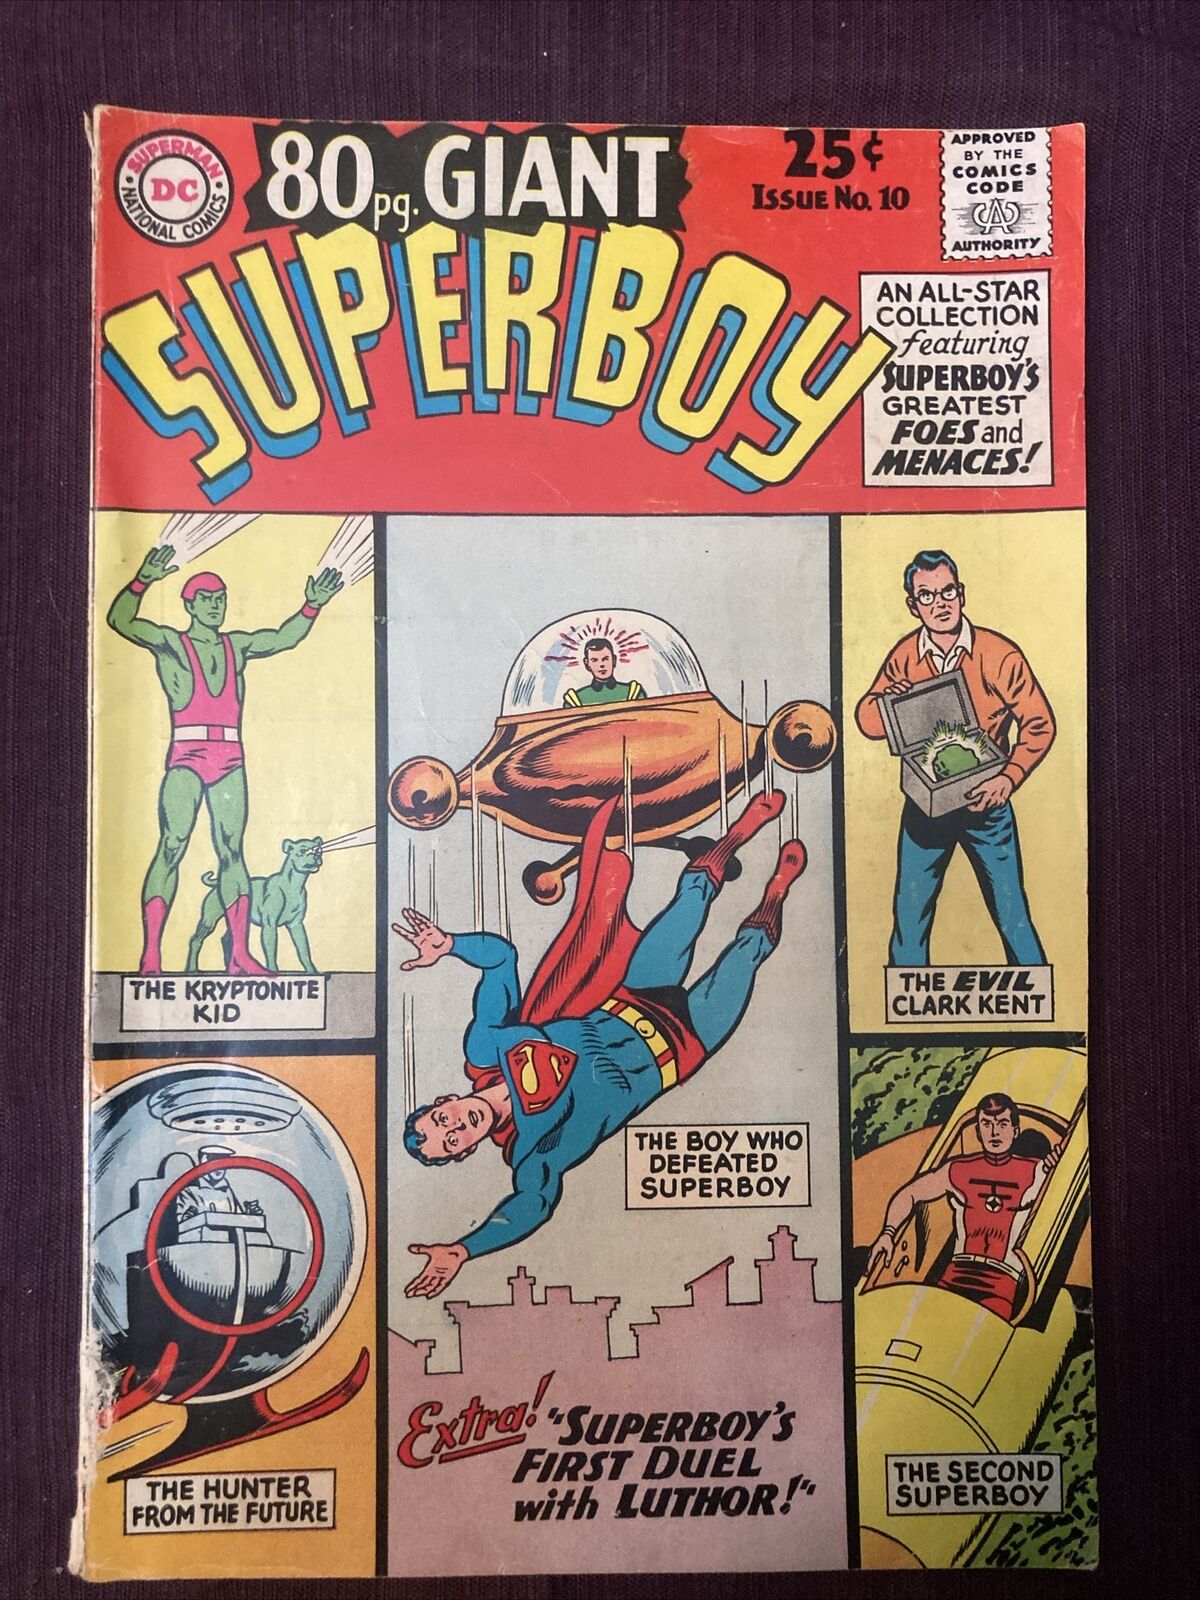 Super Boy 80 Page Giant Annual #10 Superman Silver Age 1965 DC Comics